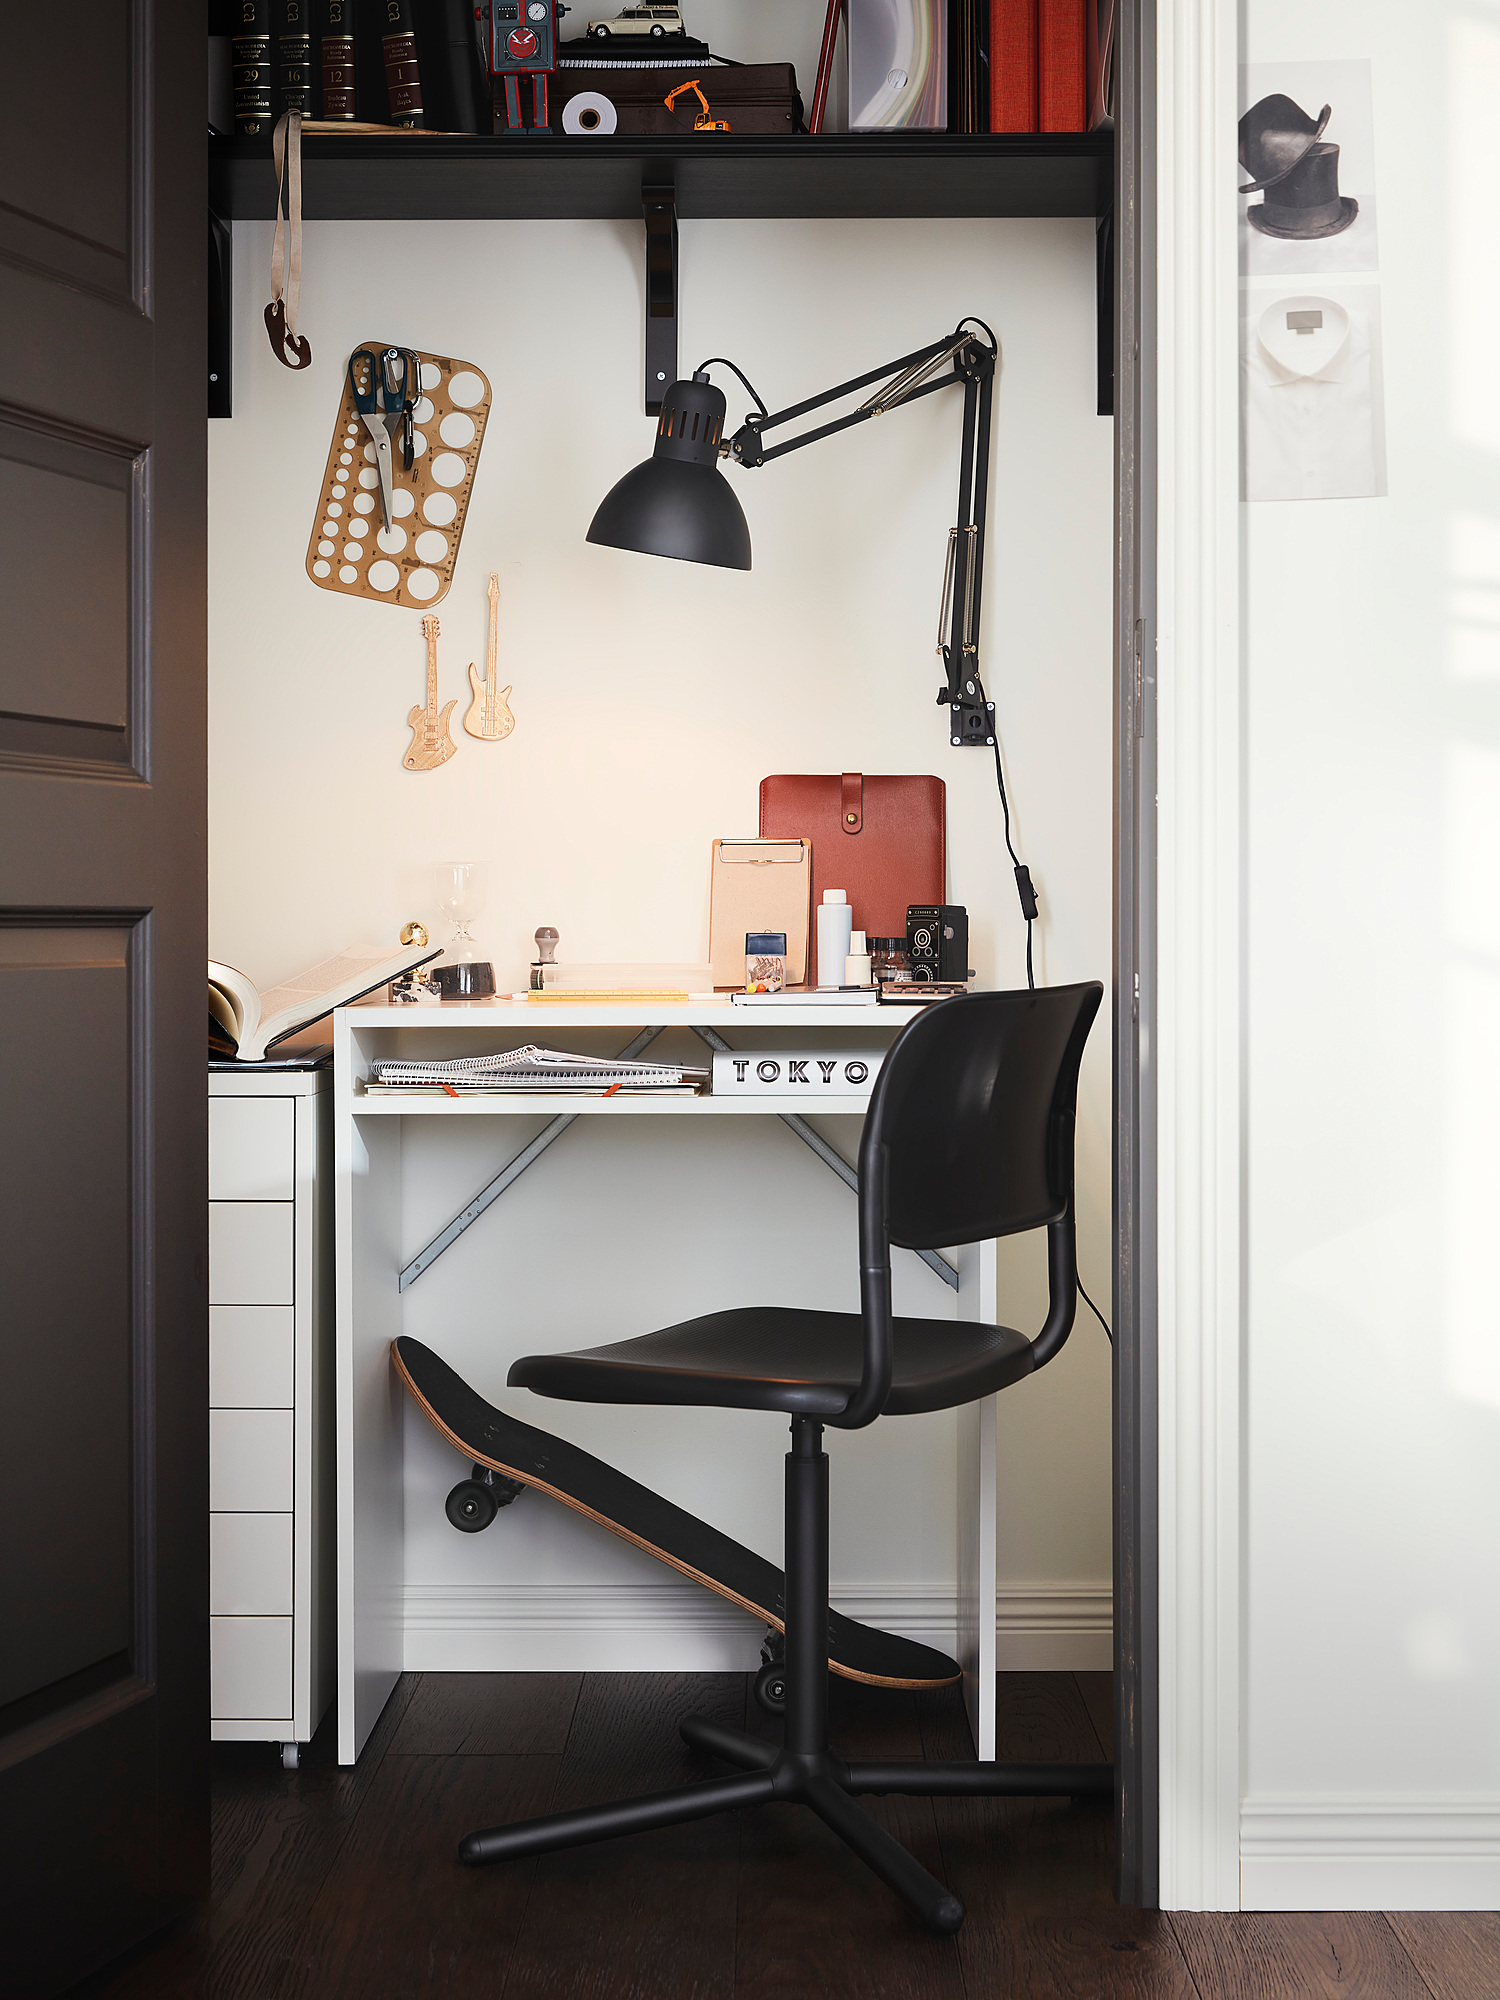 TORALD/SMÄLLEN desk and chair